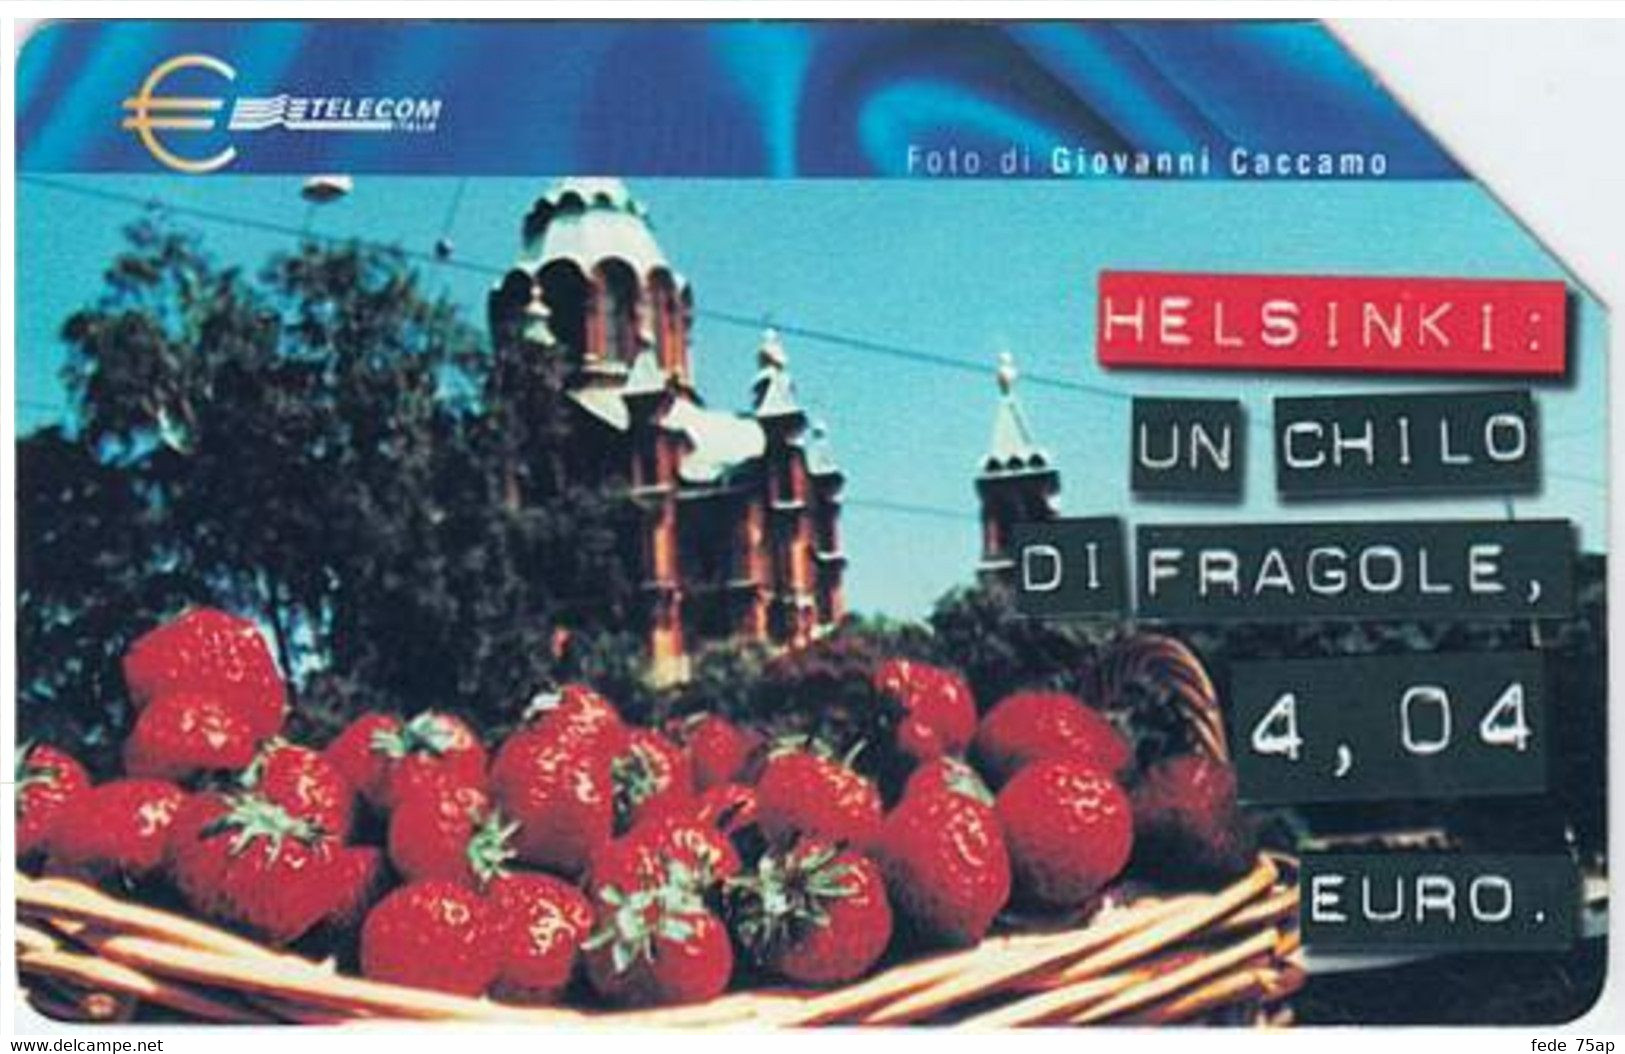 Scheda Telefonica TELECOM ITALIA "EURO - HELSINKI" - Catalogo Golden Lira Nr. 1089, Usata - Levensmiddelen